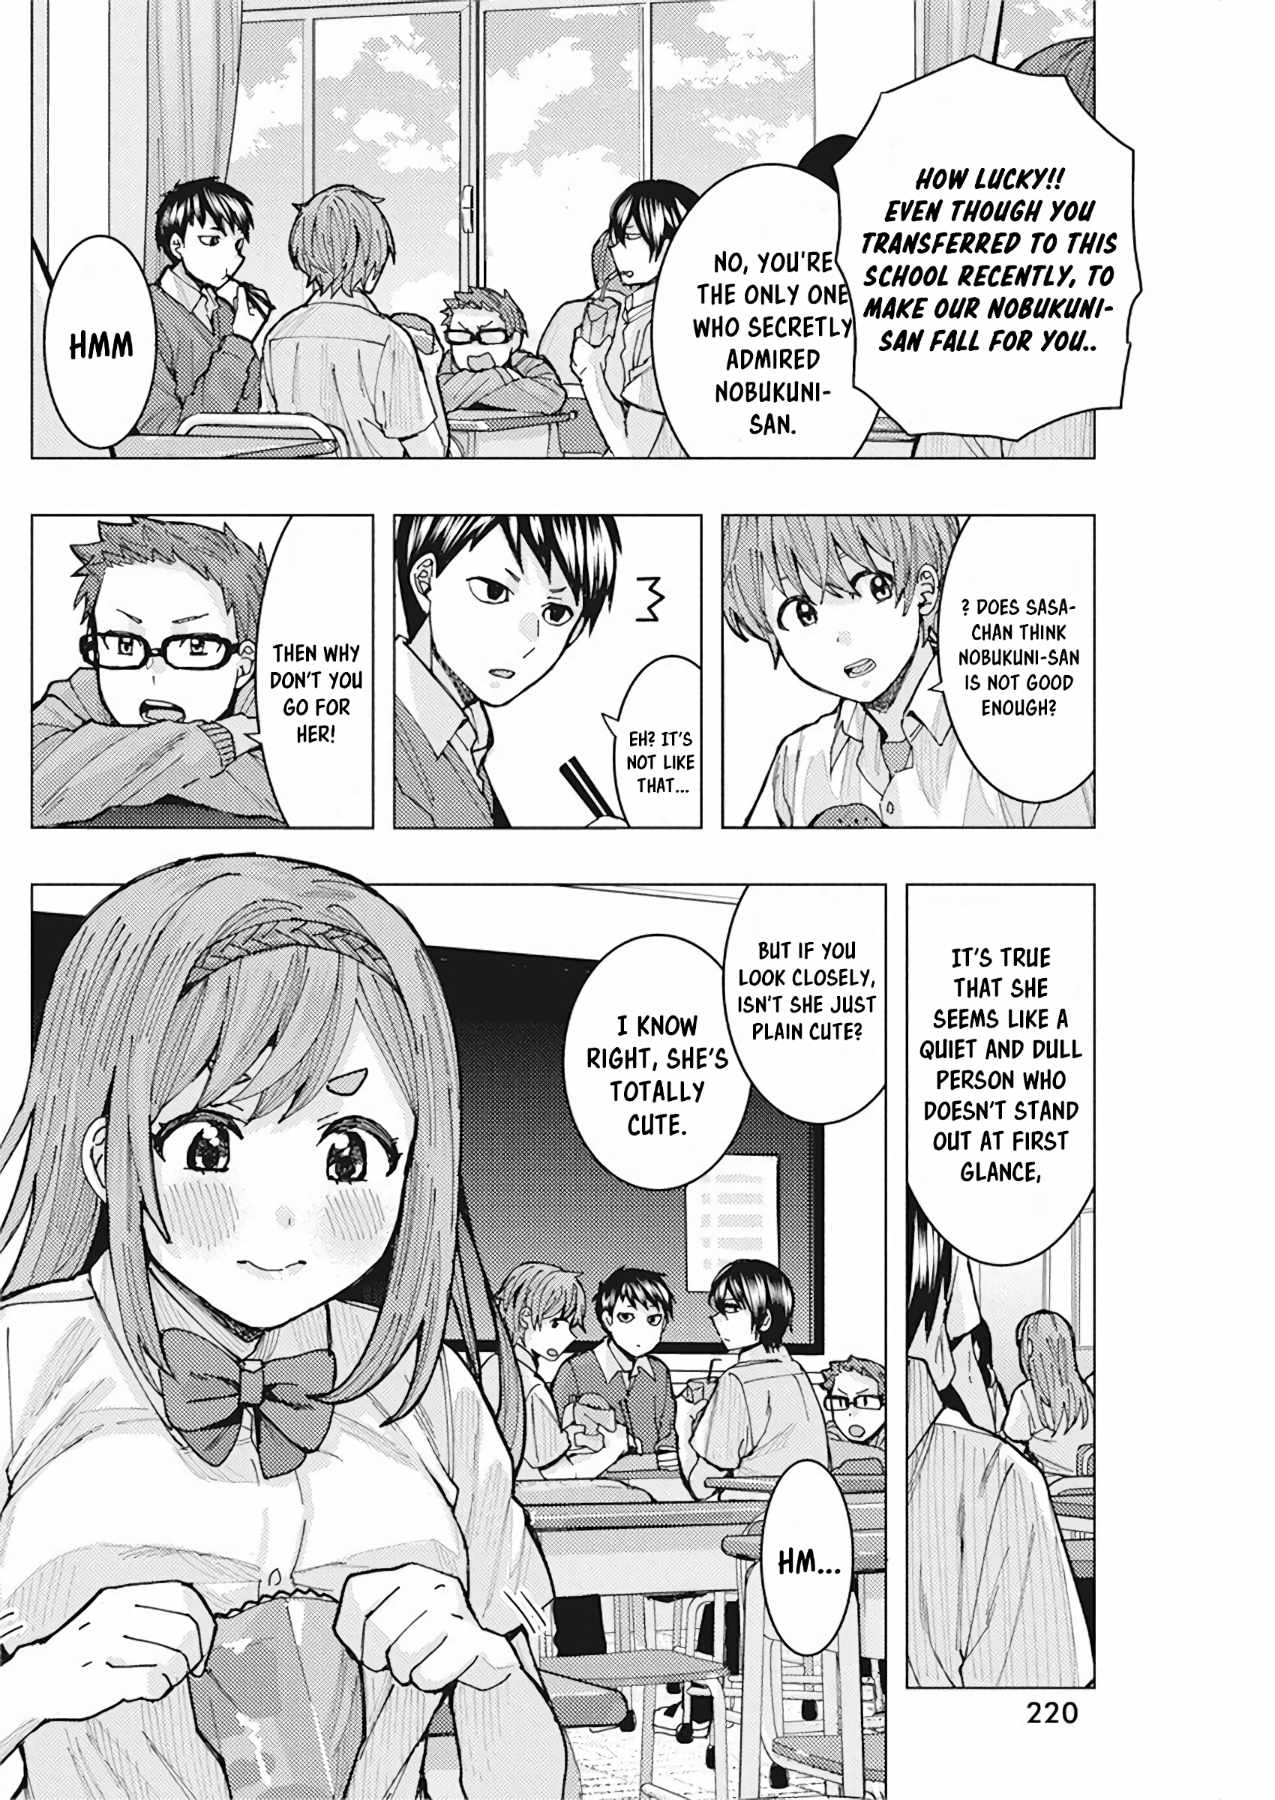 "nobukuni-San" Does She Like Me? - 7 page 8-f594df8c